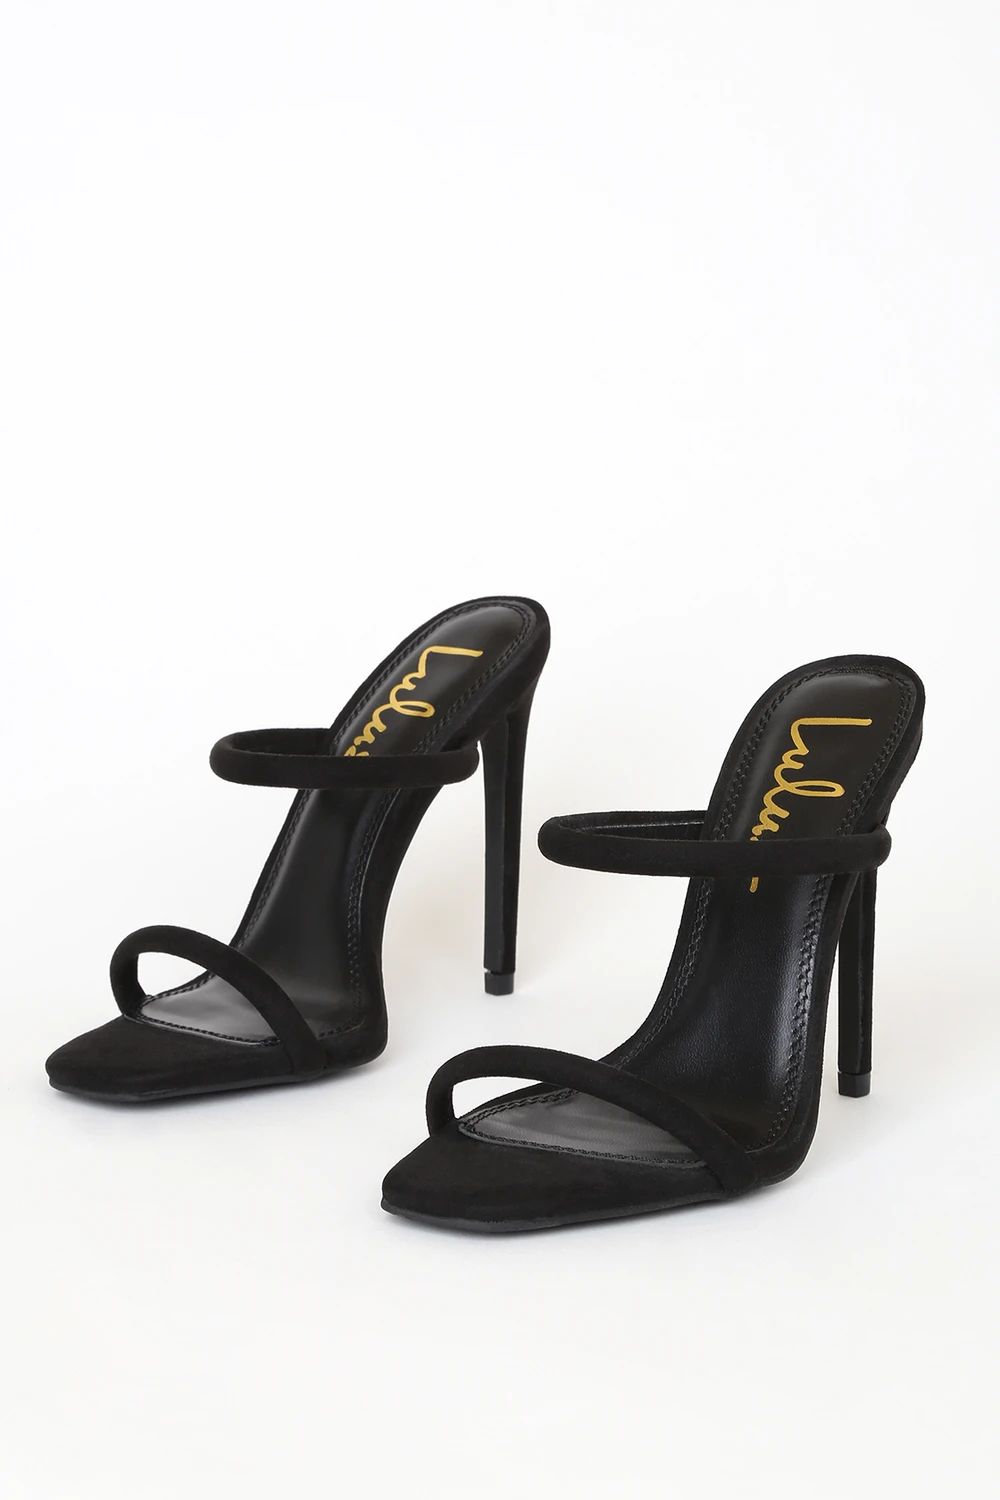 Theyaa Black Suede Square-Toe High Heel Sandals | Lulus (US)